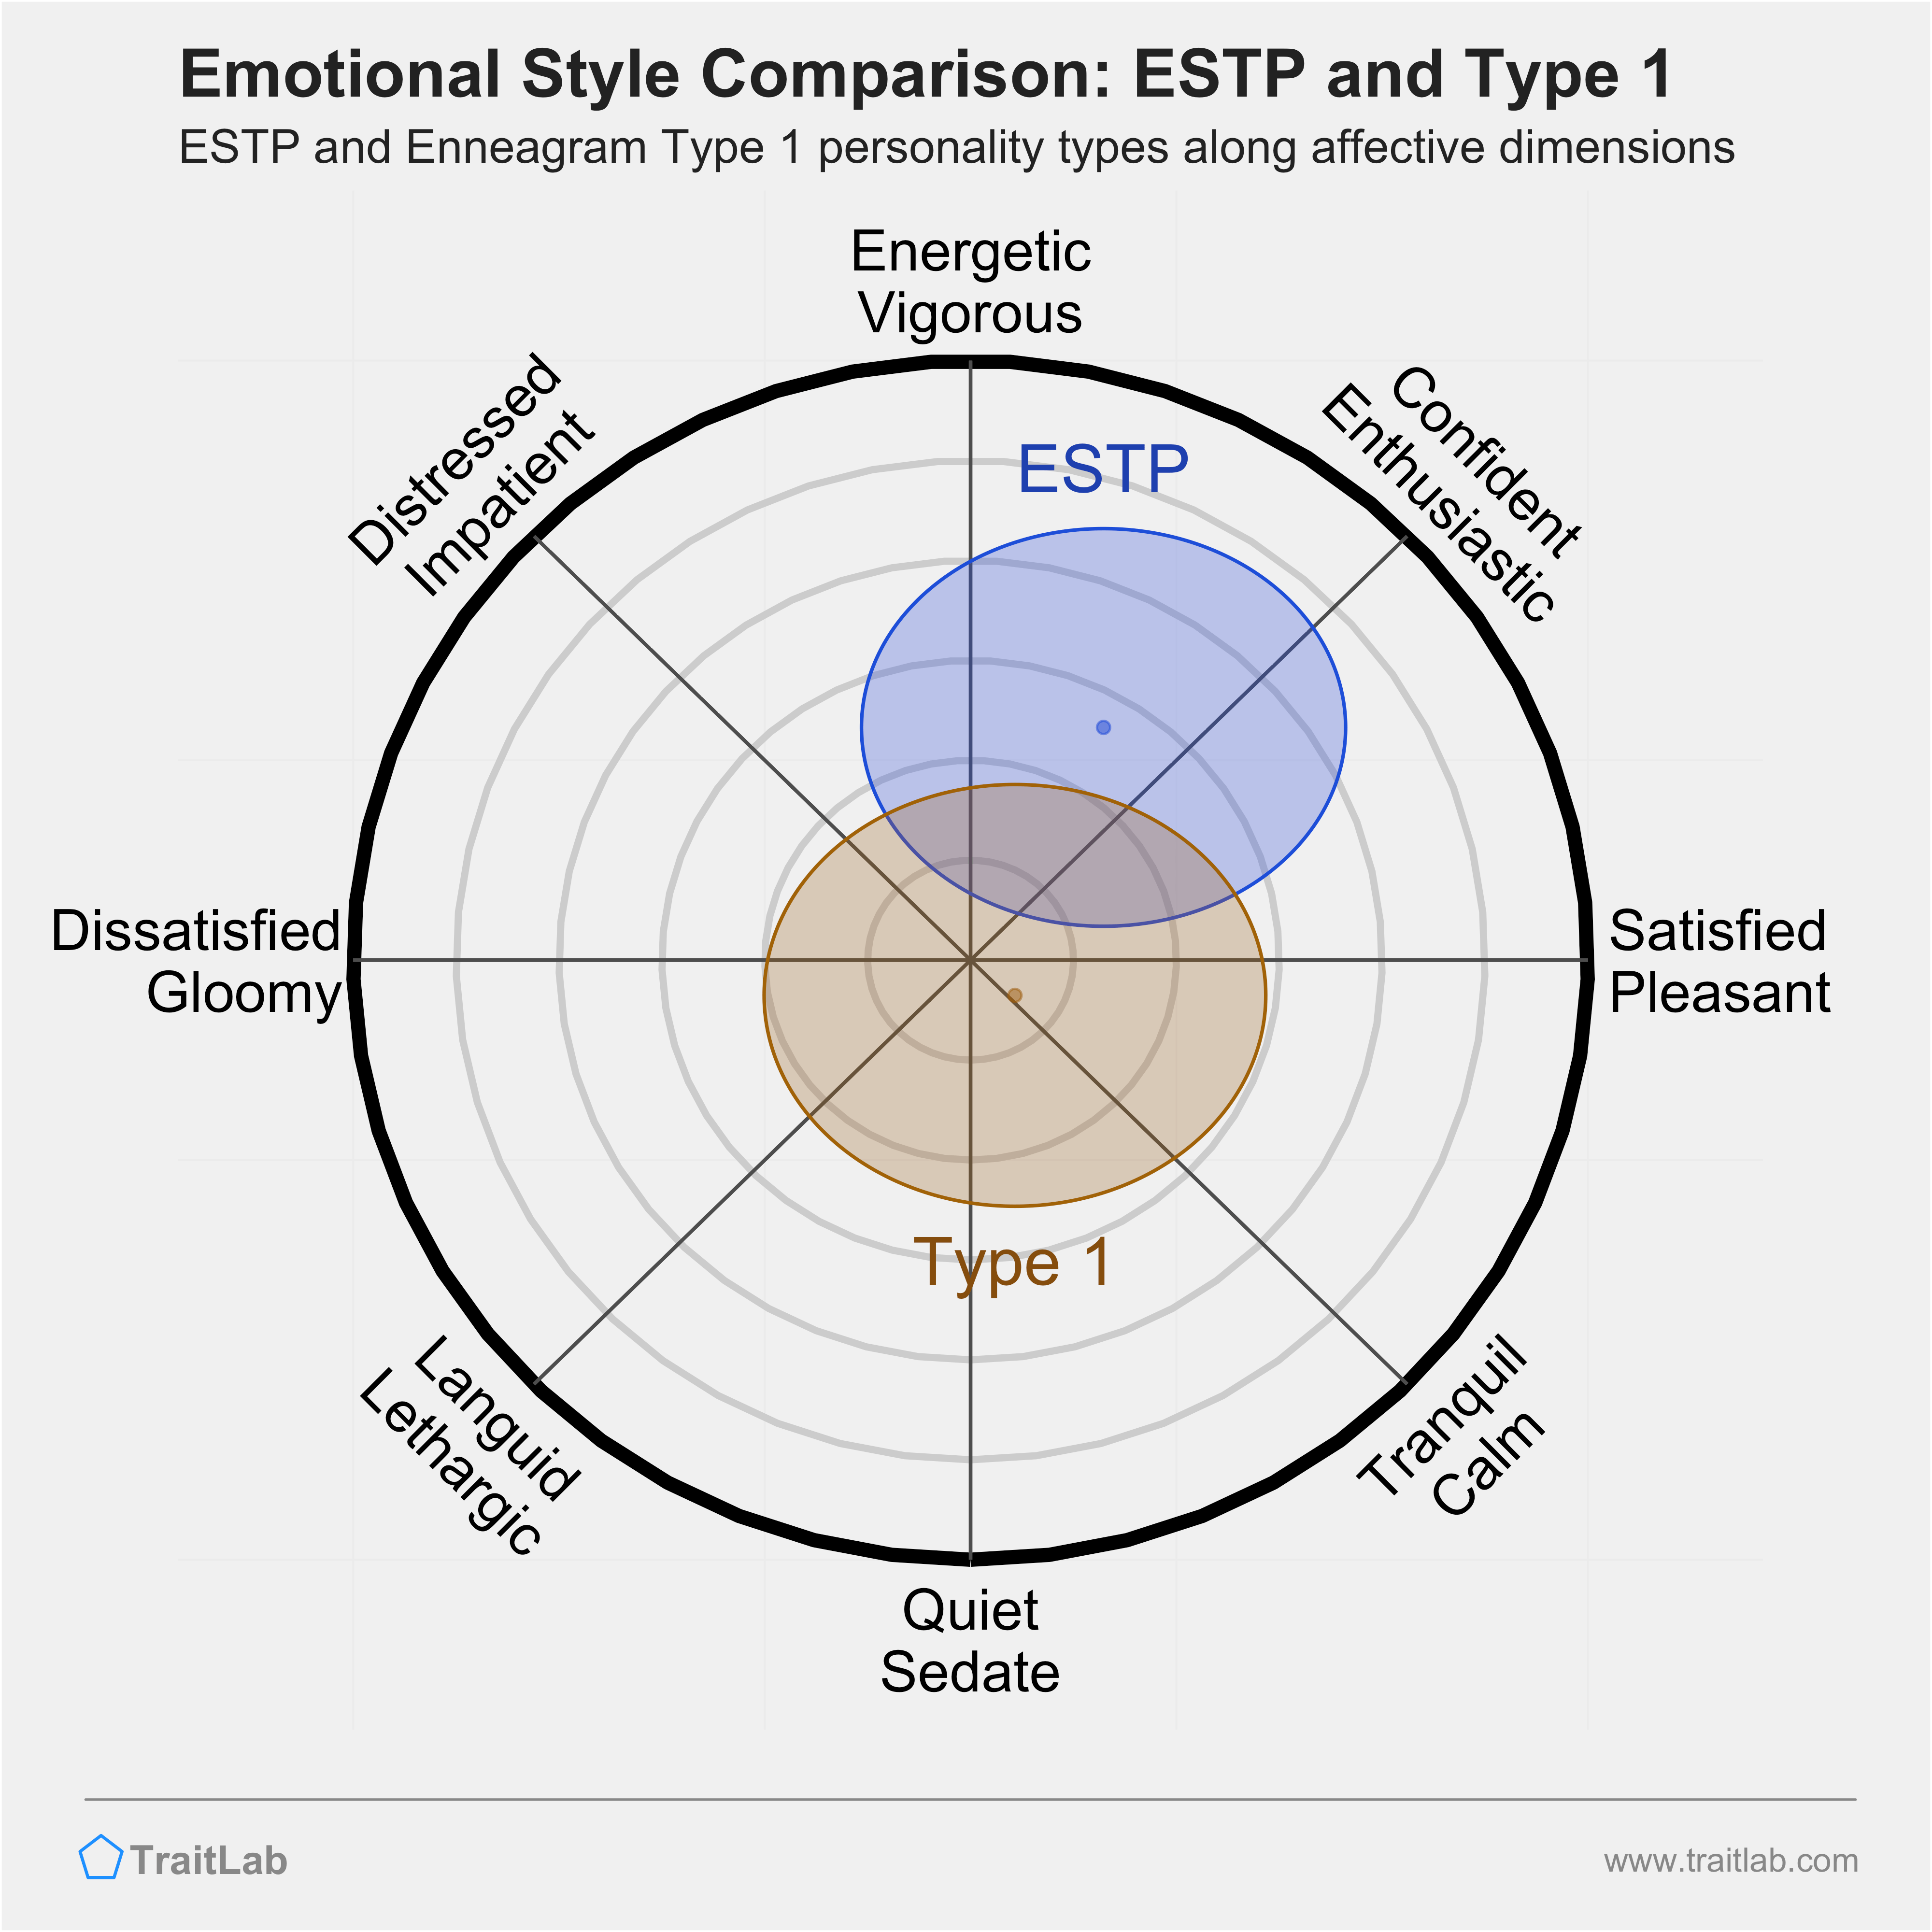 ESTP and Type 1 comparison across emotional (affective) dimensions